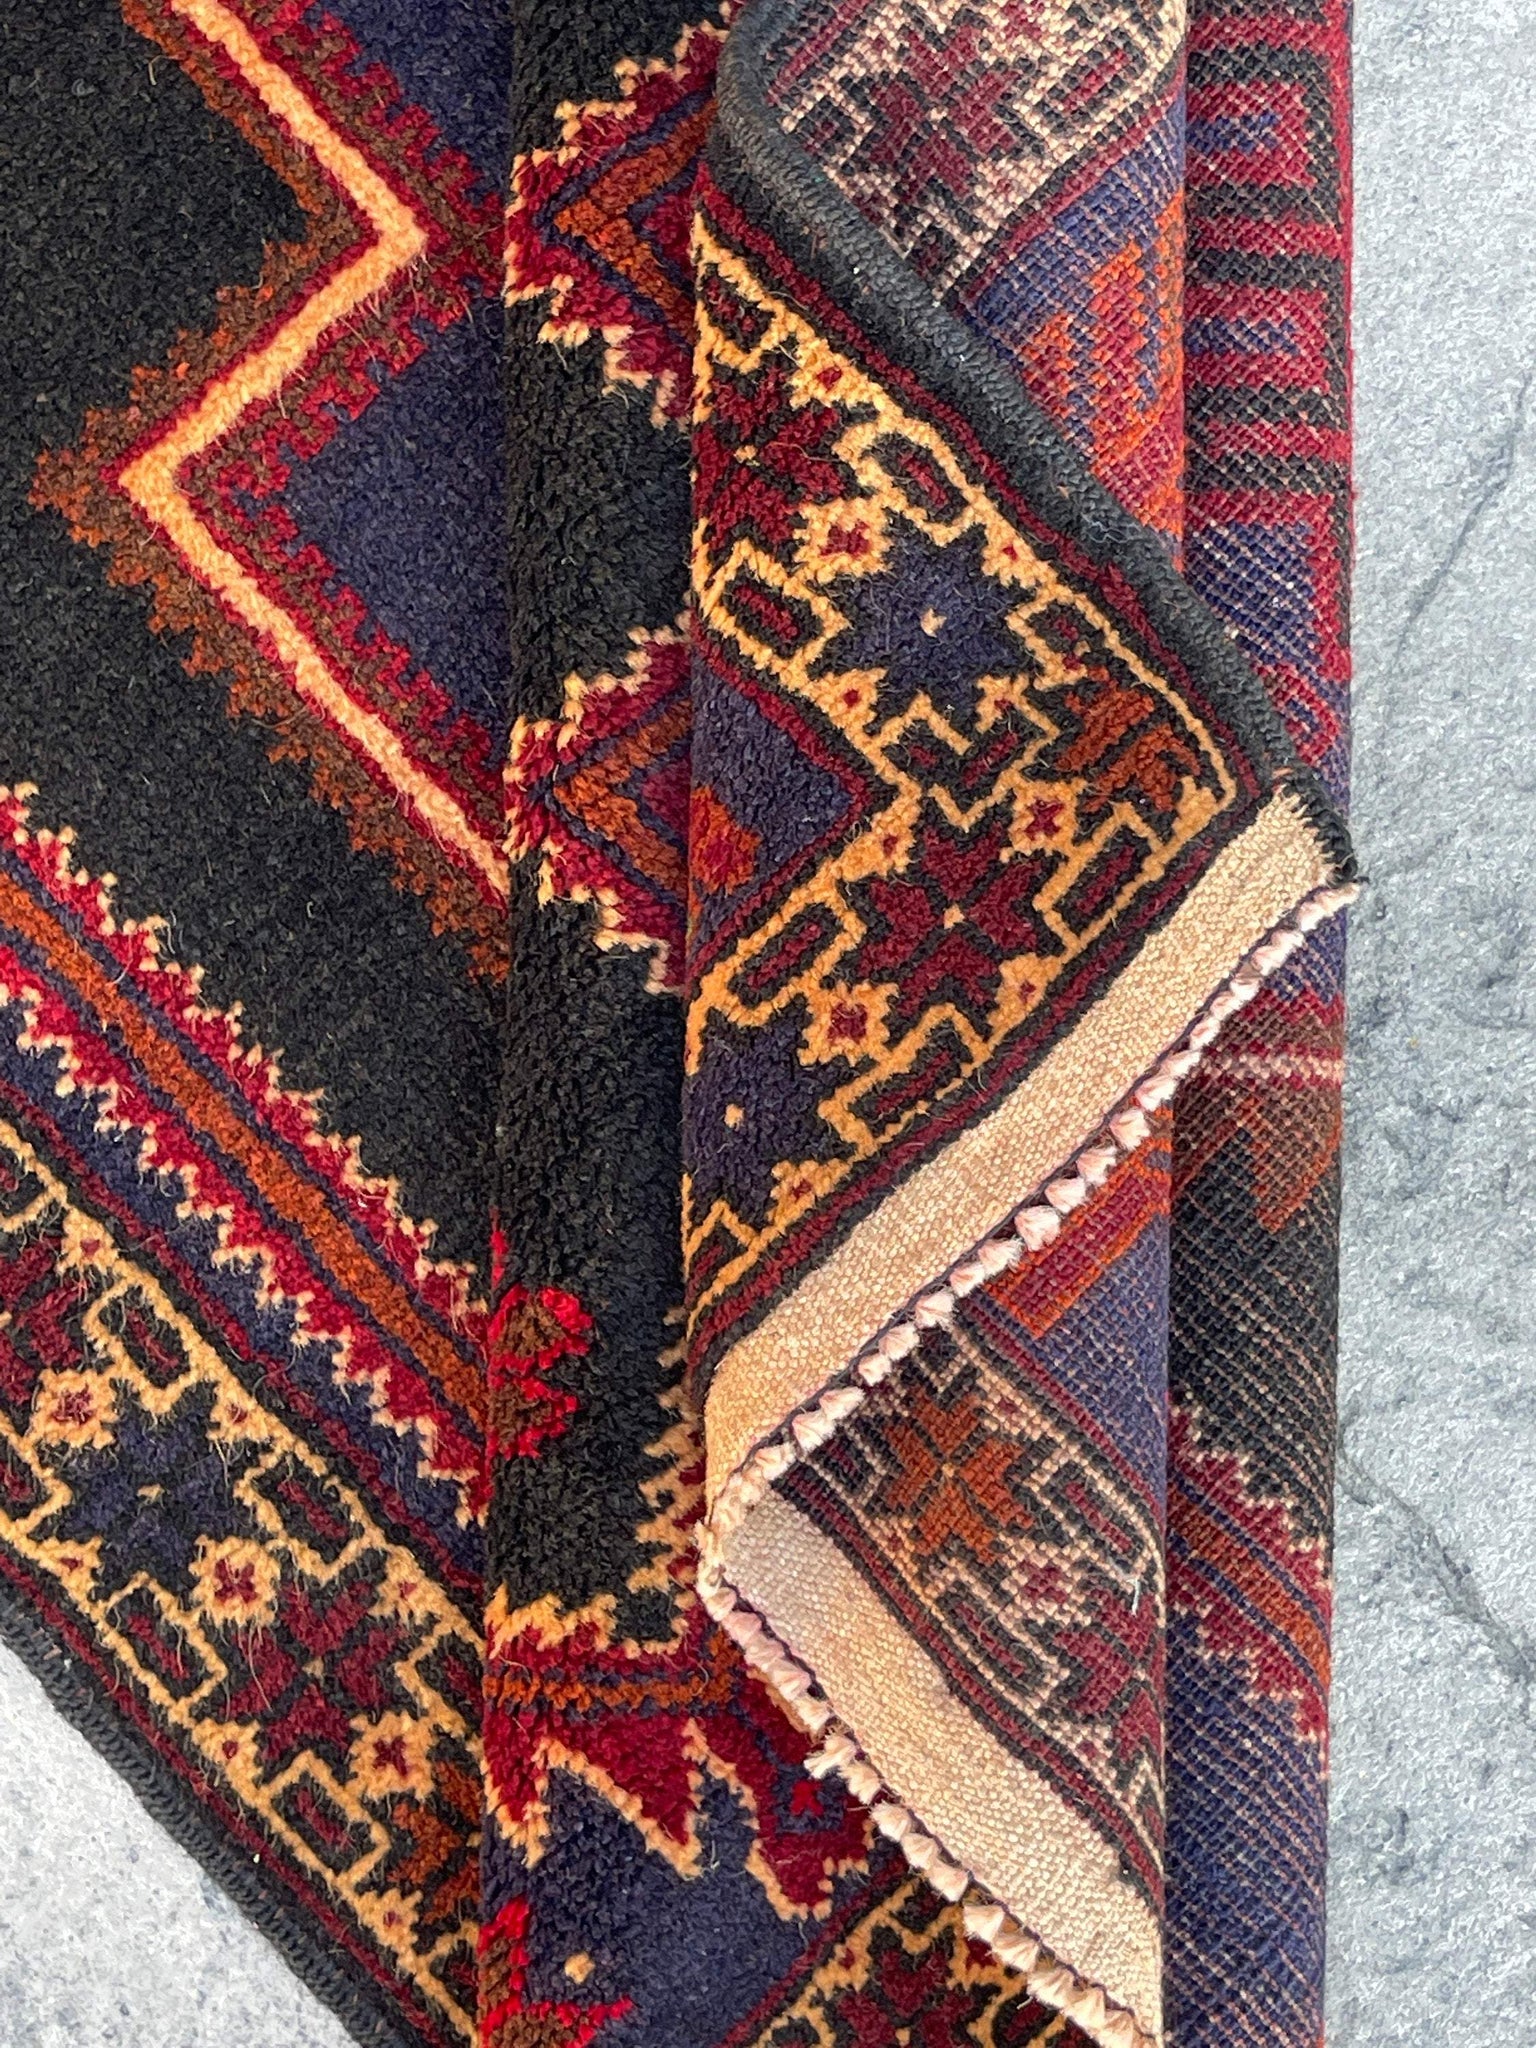 3x5 (90x150) Handmade Afghan Kilim Rug | Red Navy Blue Gold Black | Flatweave Boho Tribal Turkish Moroccan Oriental Wool Outdoor